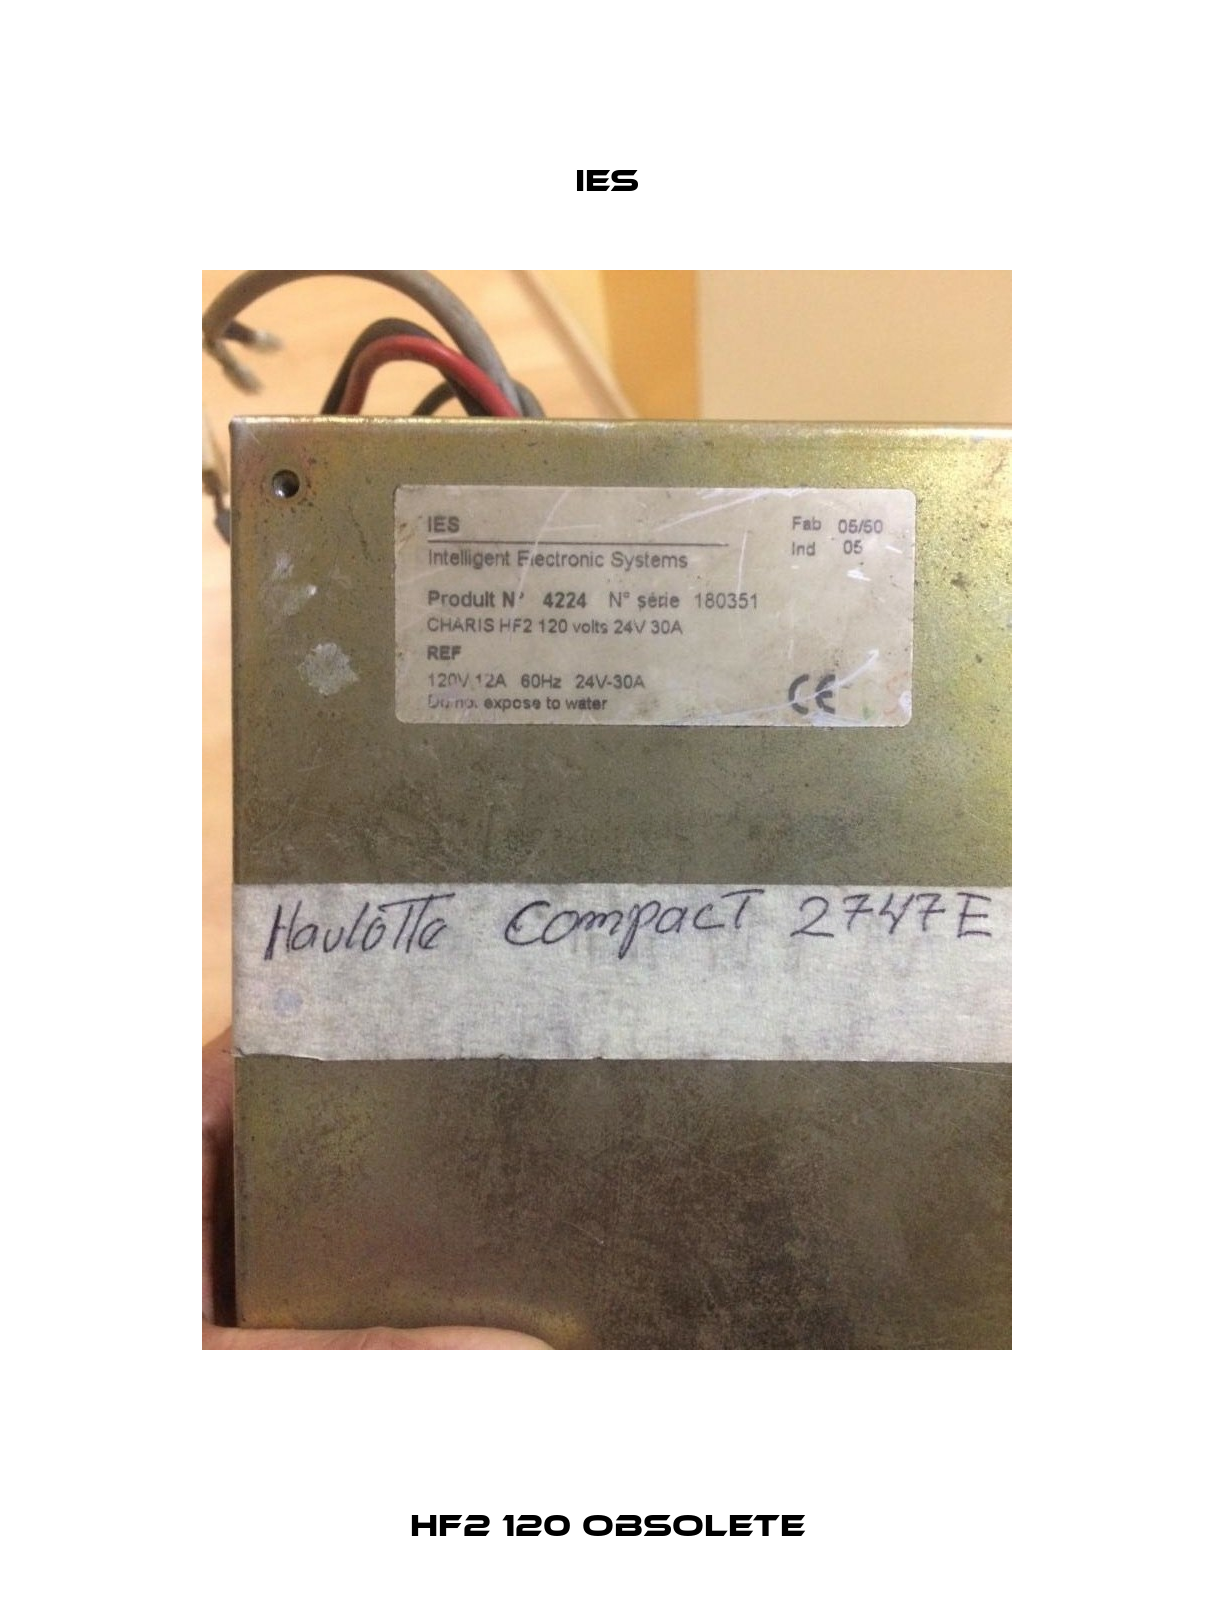 HF2 120 obsolete IES